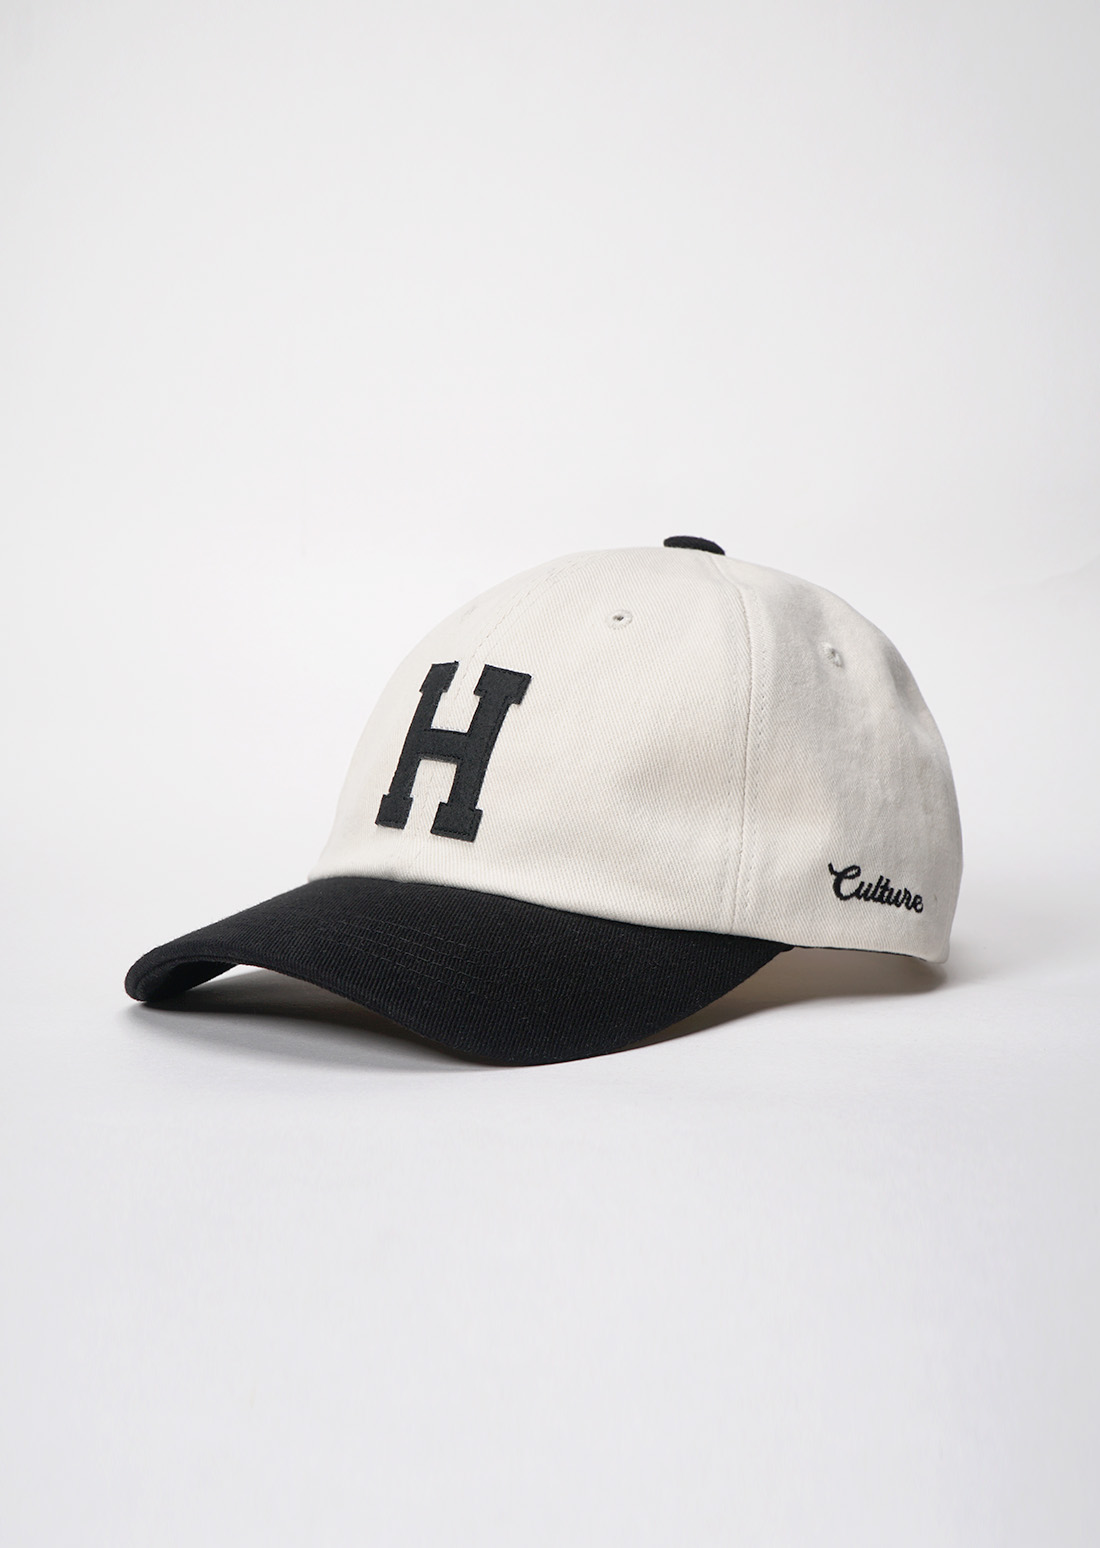 H logo ball cap(Black)